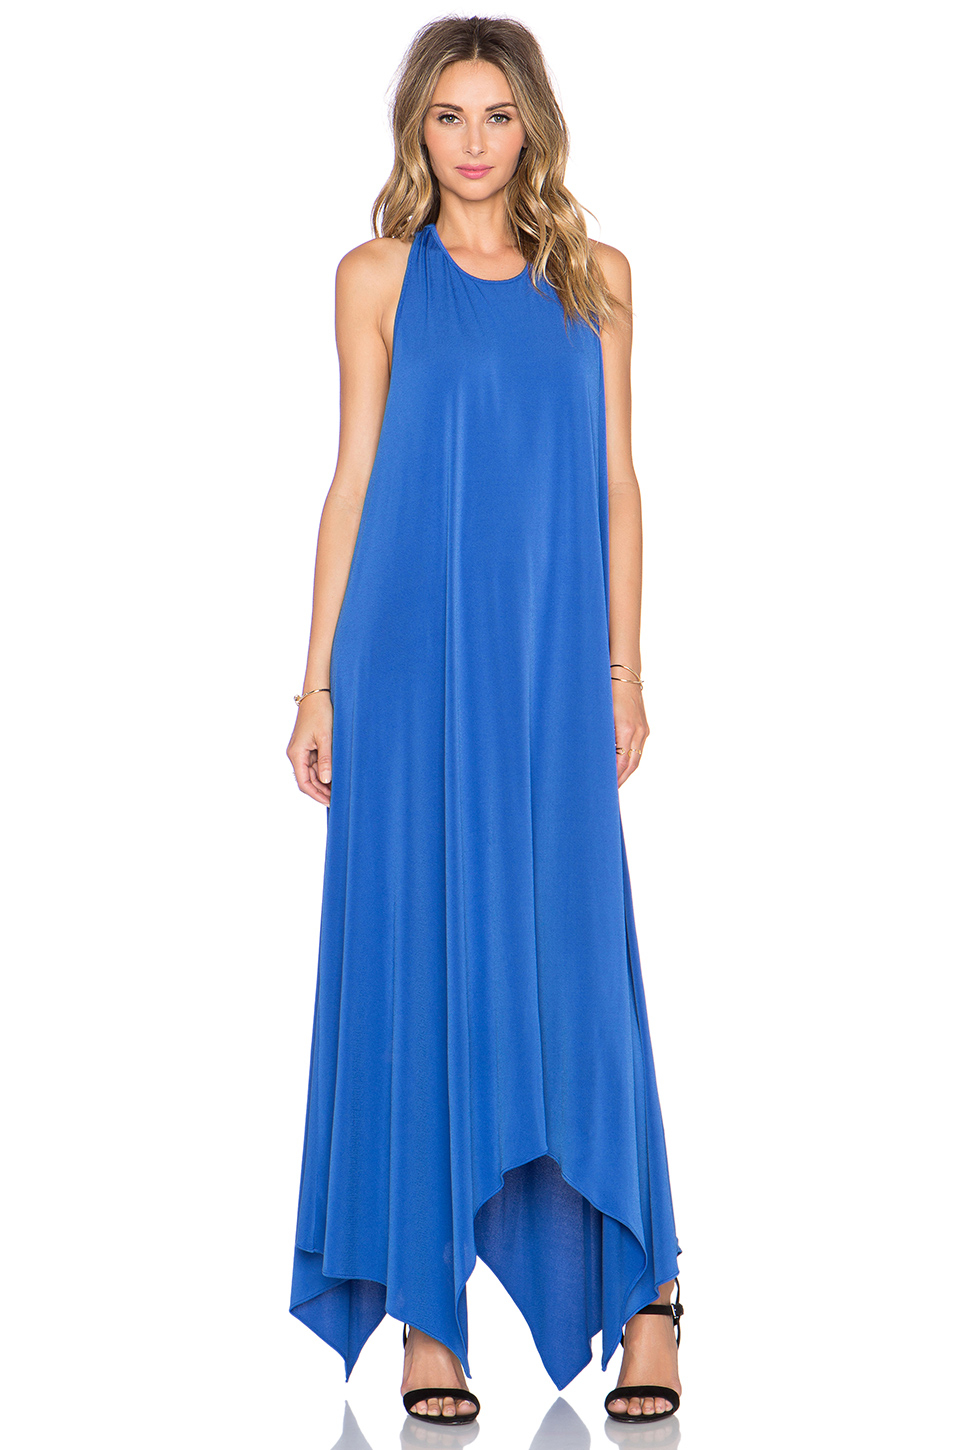 Lyst - Rachel Zoe Athena Halter Maxi Dress in Blue